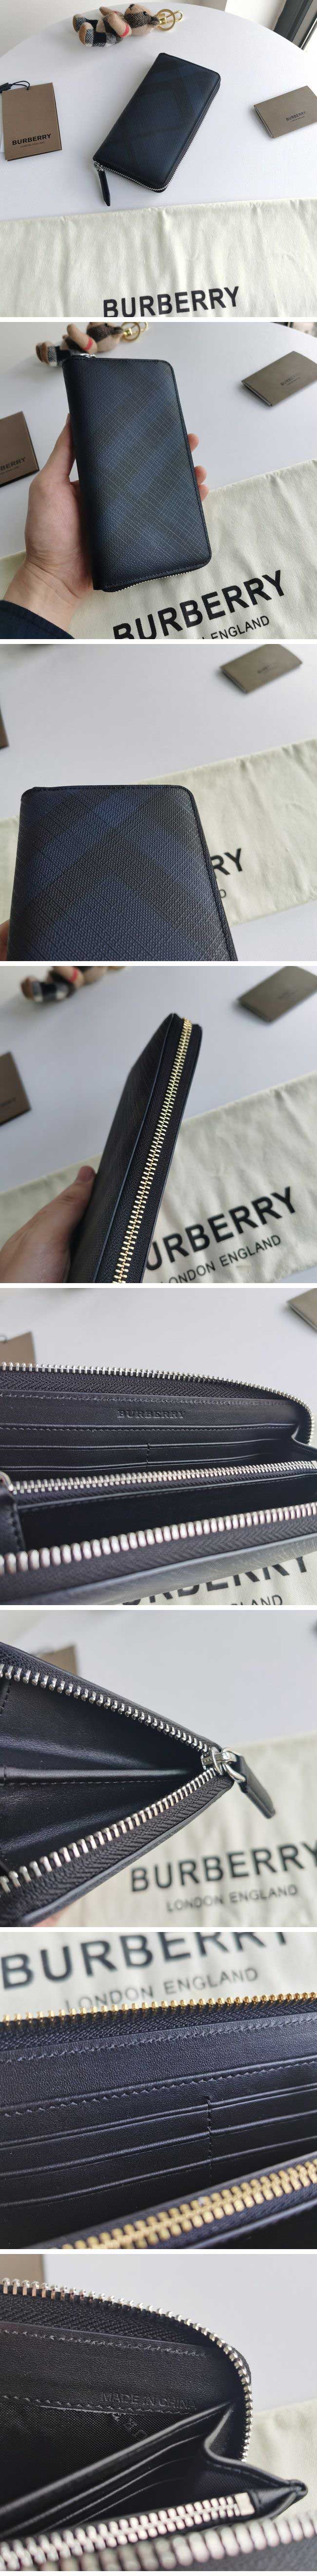 Burberry Checked Round Zip Wallet バーバリー チェック ラウンドジップ ウォレット 財布 ネイビー【N級】